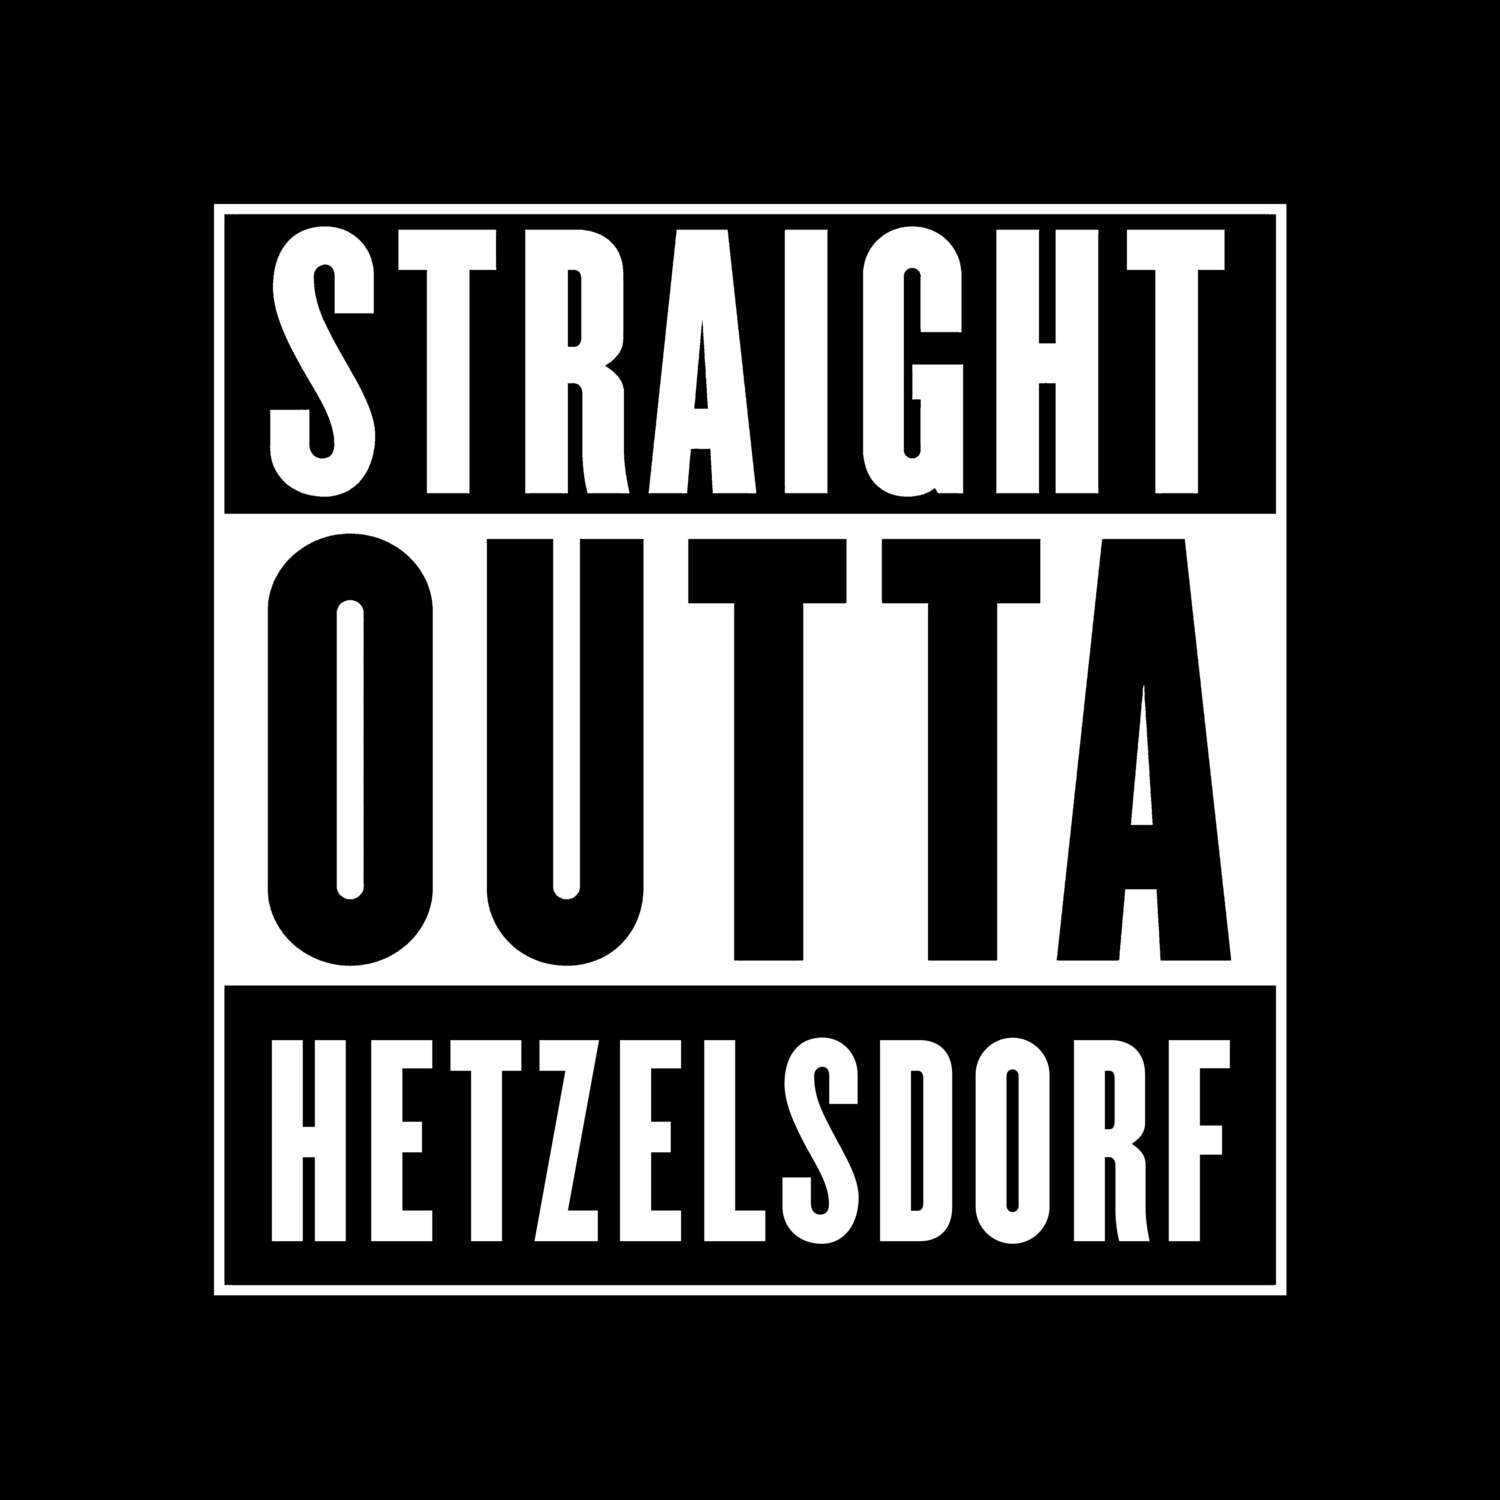 Hetzelsdorf T-Shirt »Straight Outta«